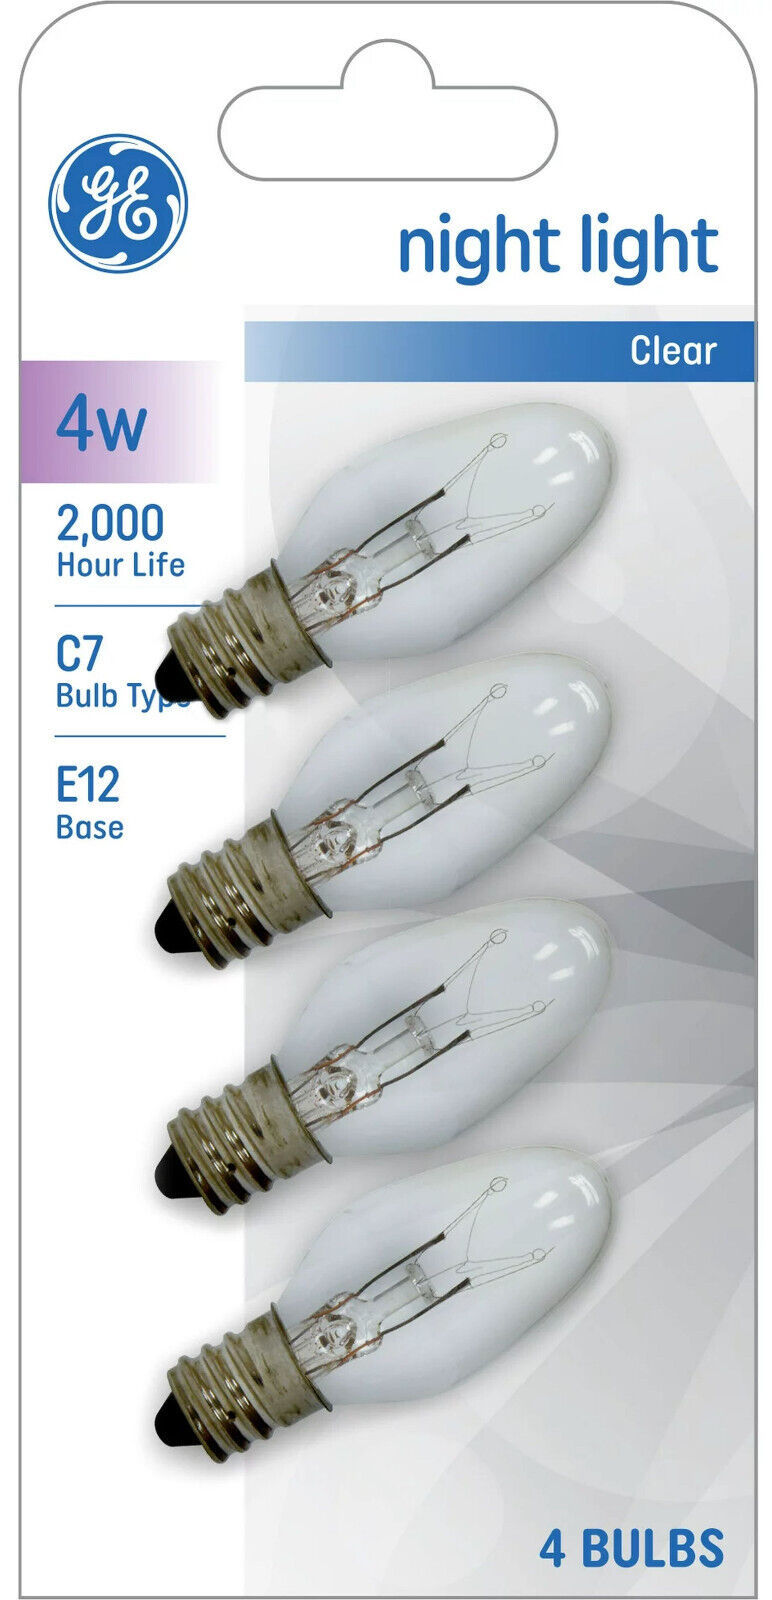 GE CLEAR Night Light 4 BULBs 4 Watt 91854 e12 candelabra base C7 4w 4 PACK 73257 - $20.11